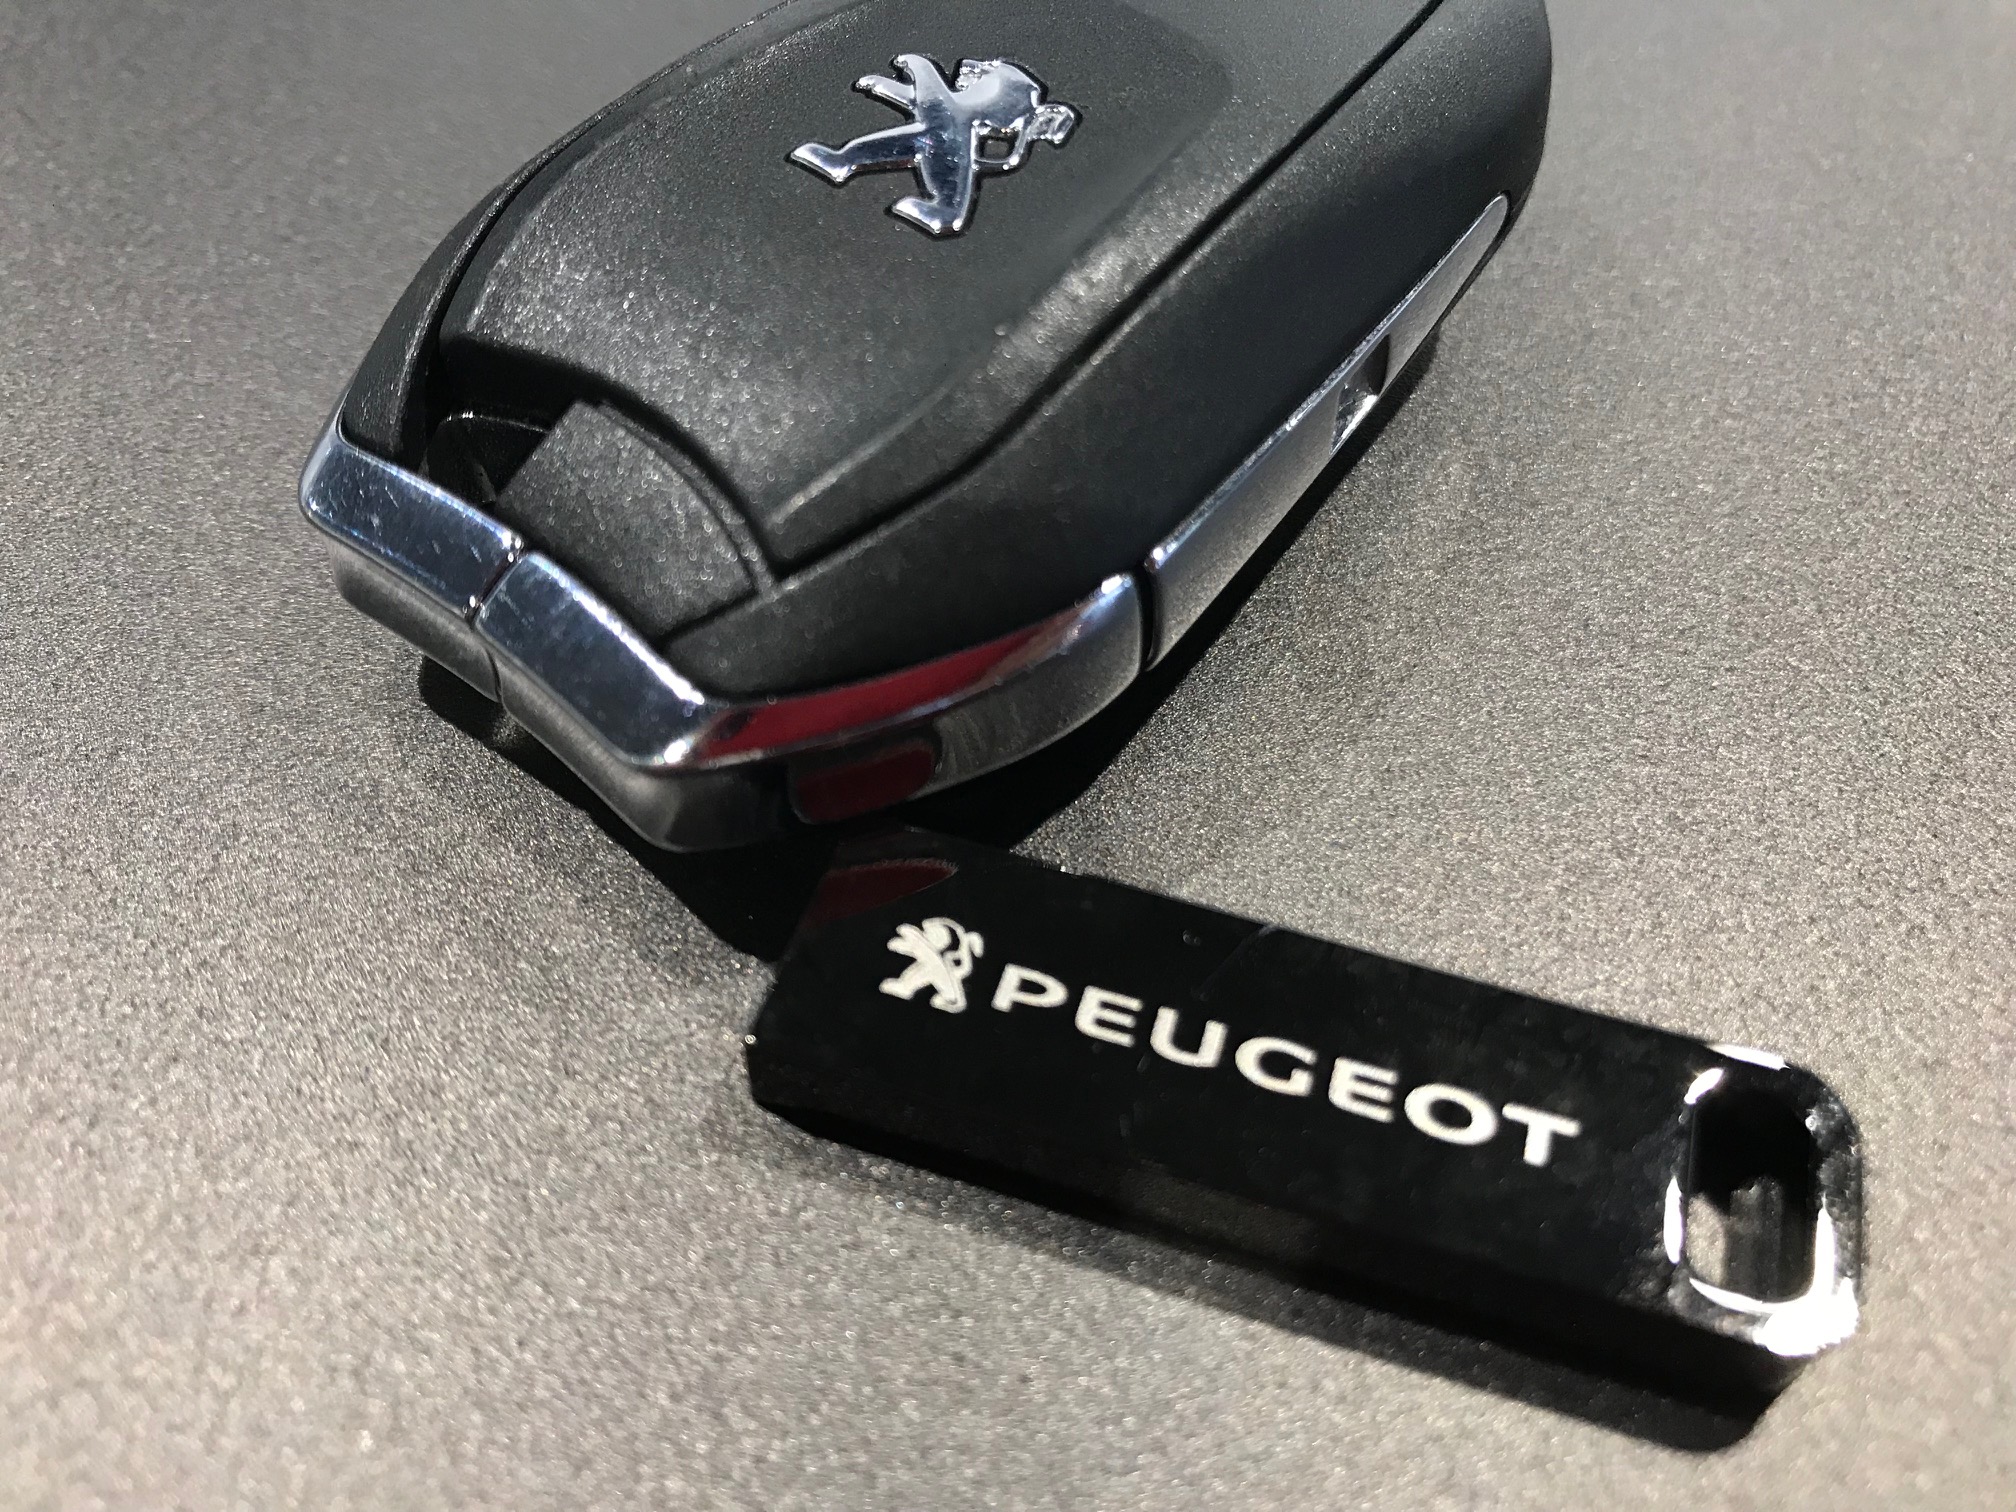 New Peugeot goods